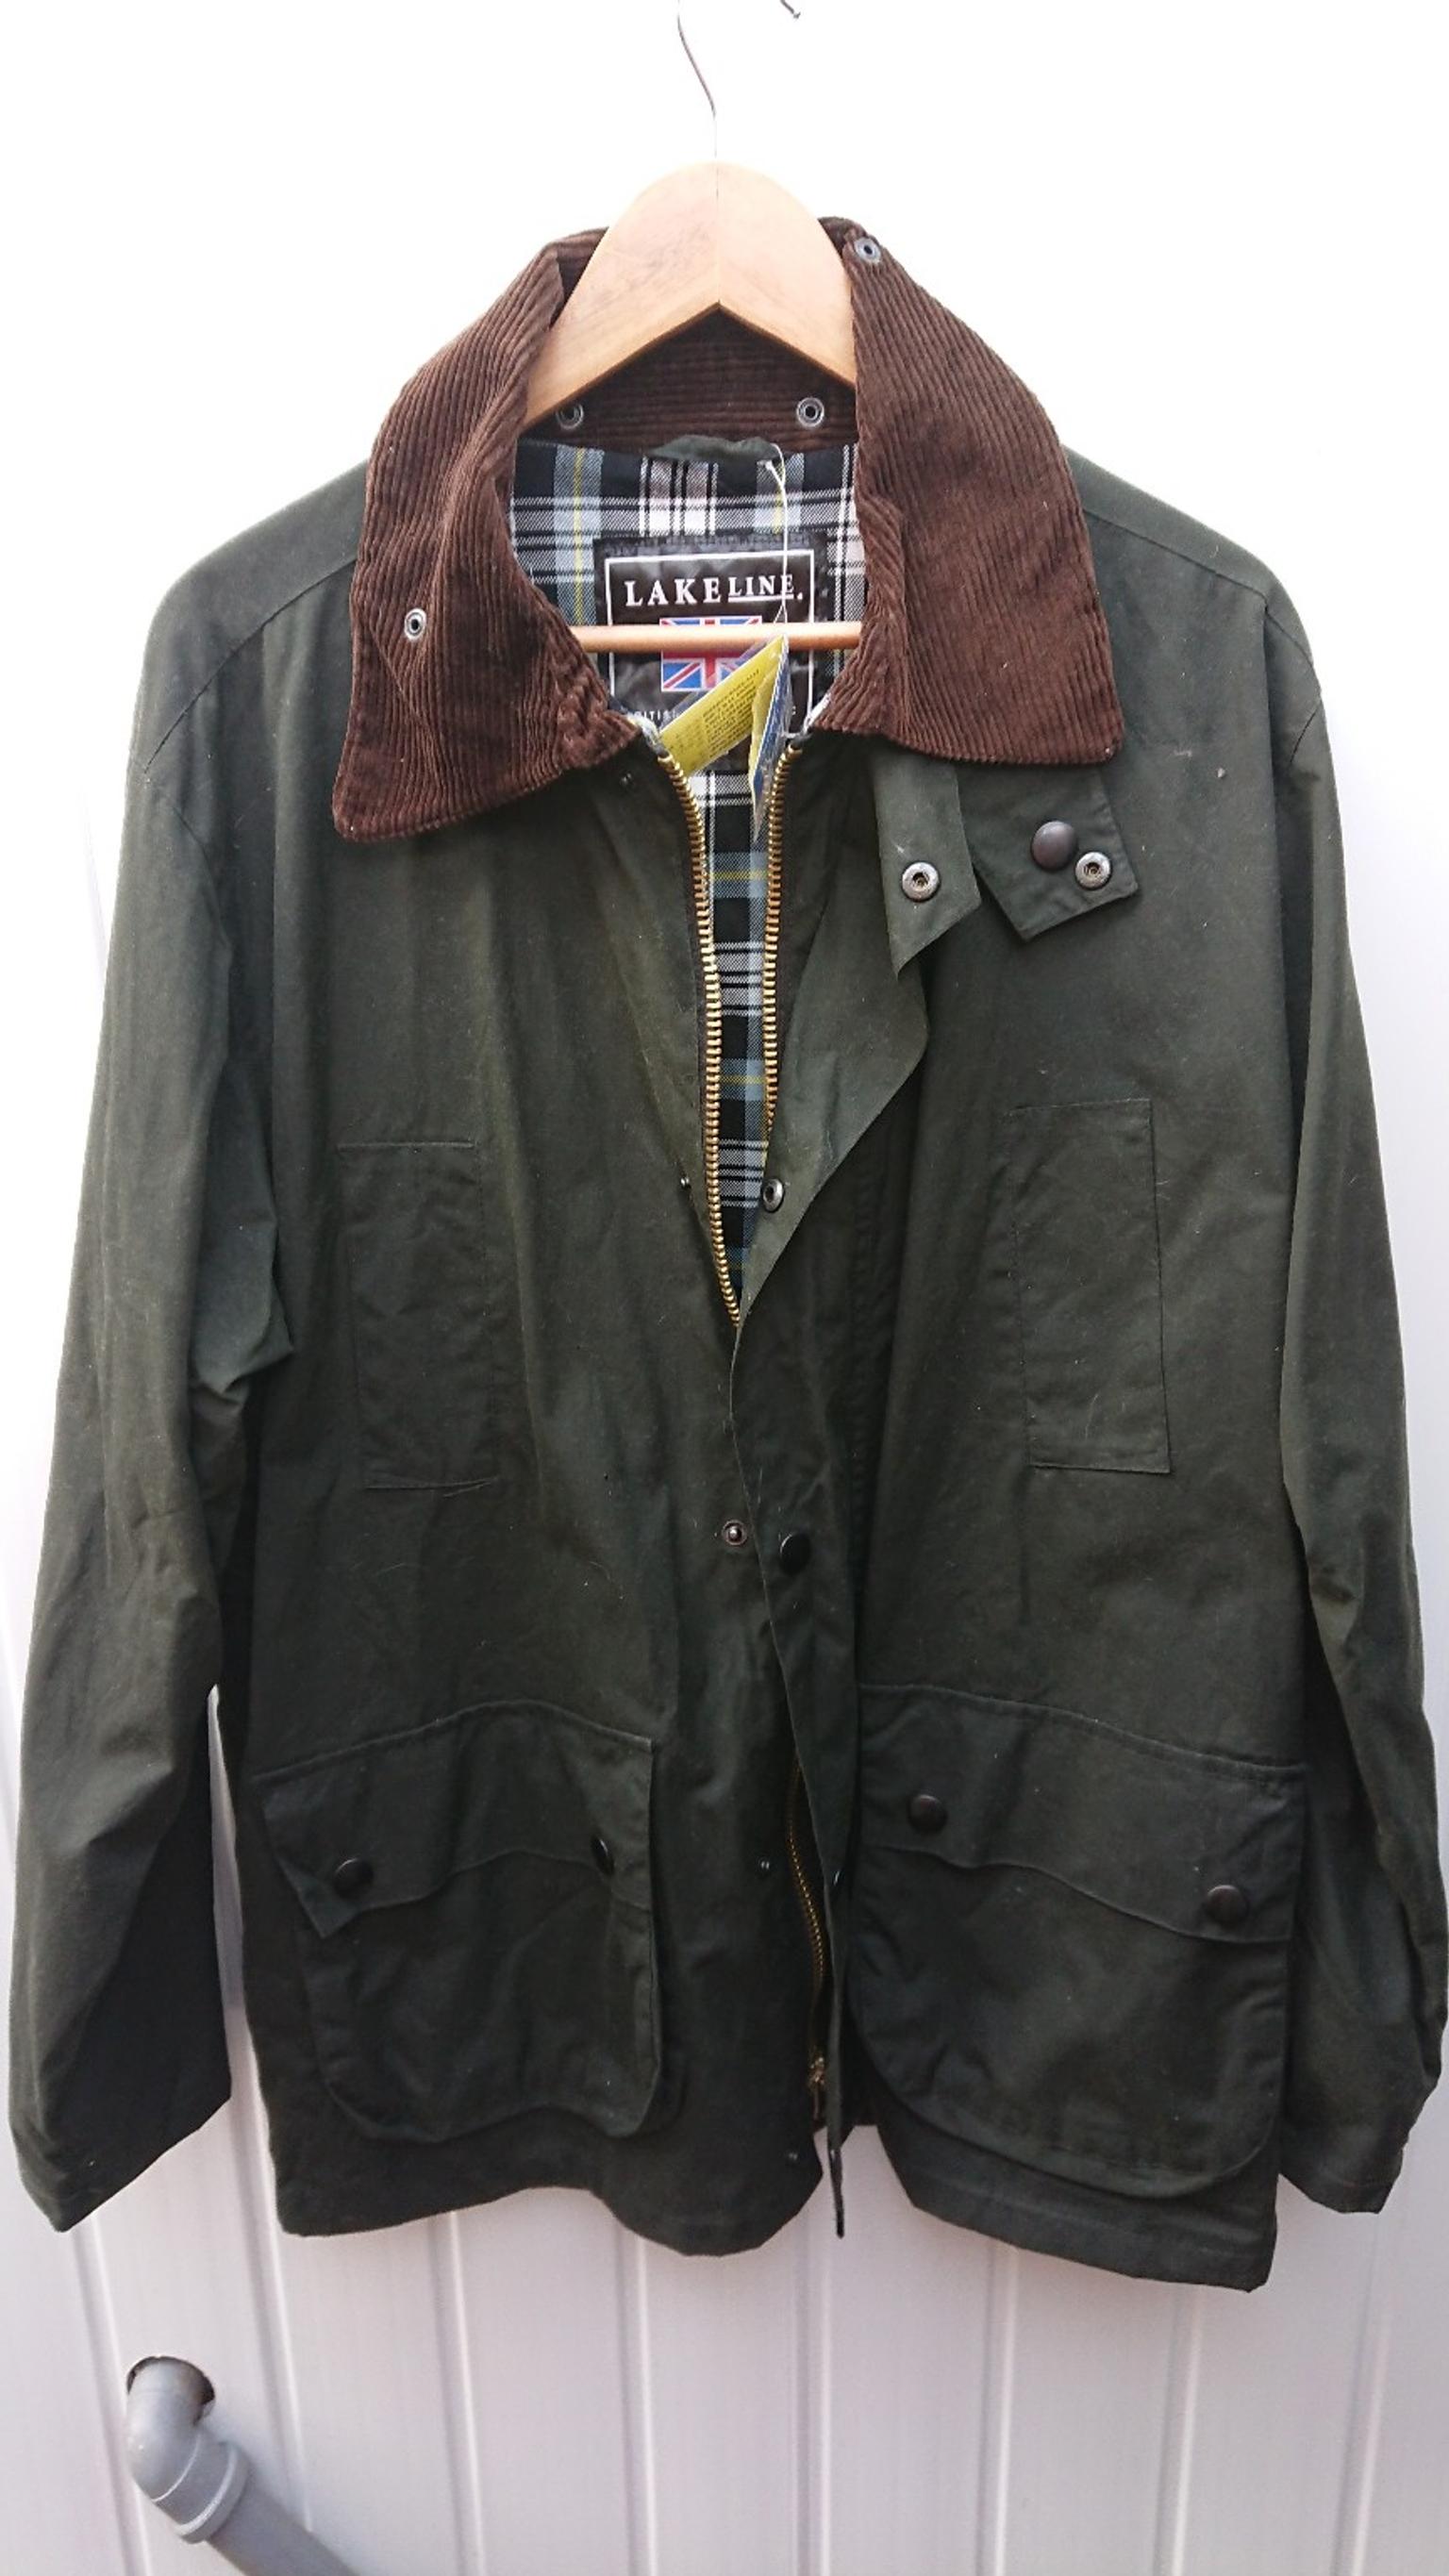 lakeline wax jacket in B71 Sandwell for 